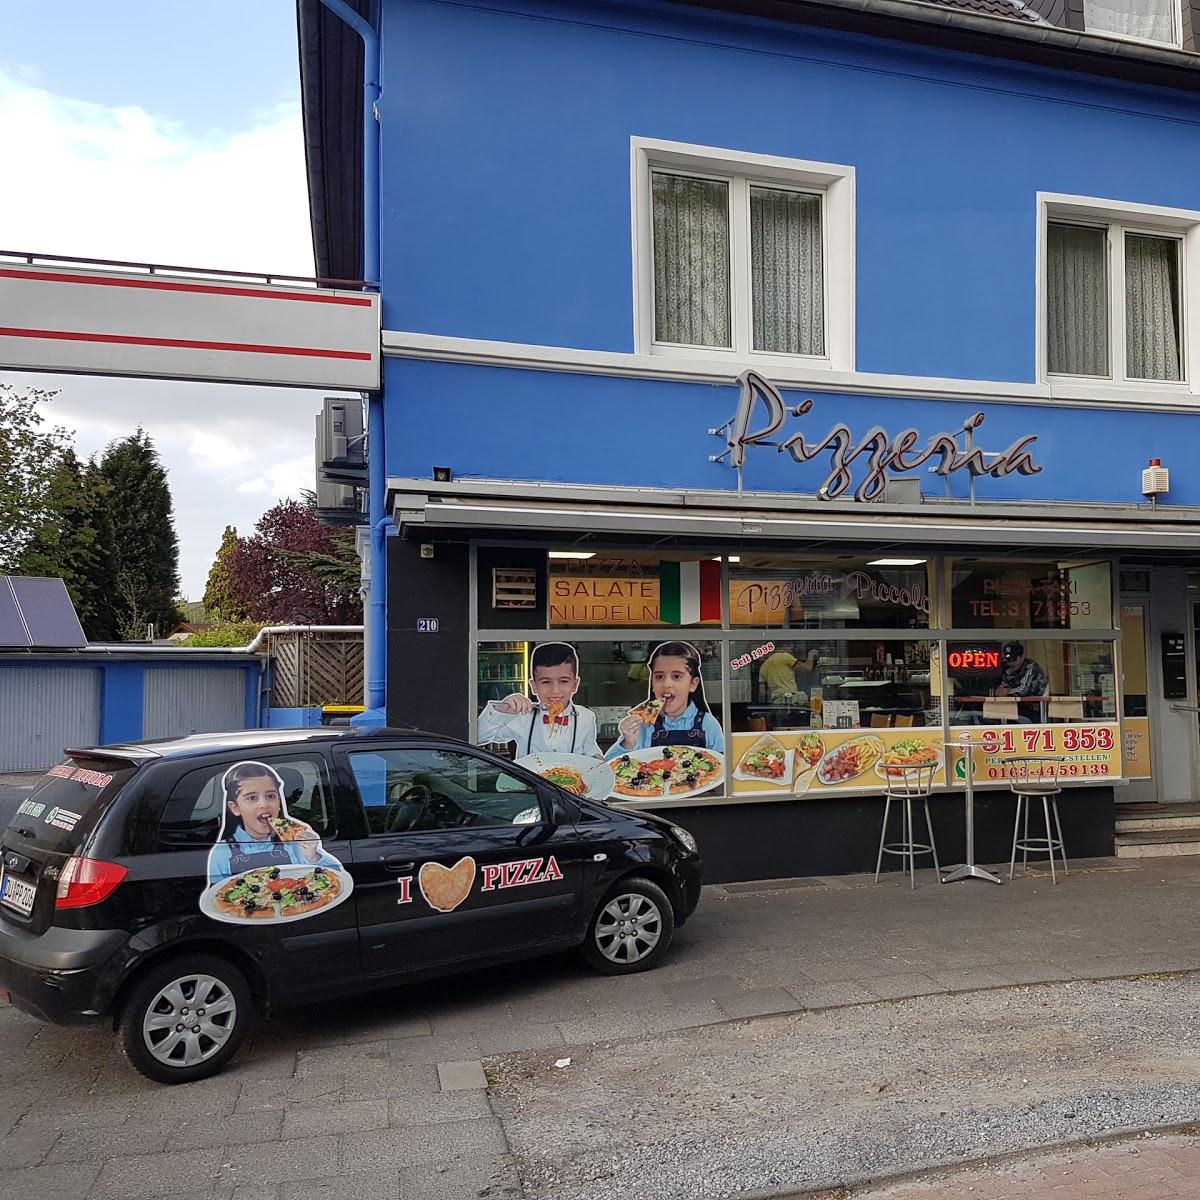 Restaurant "Pizzeria Piccolo" in Duisburg